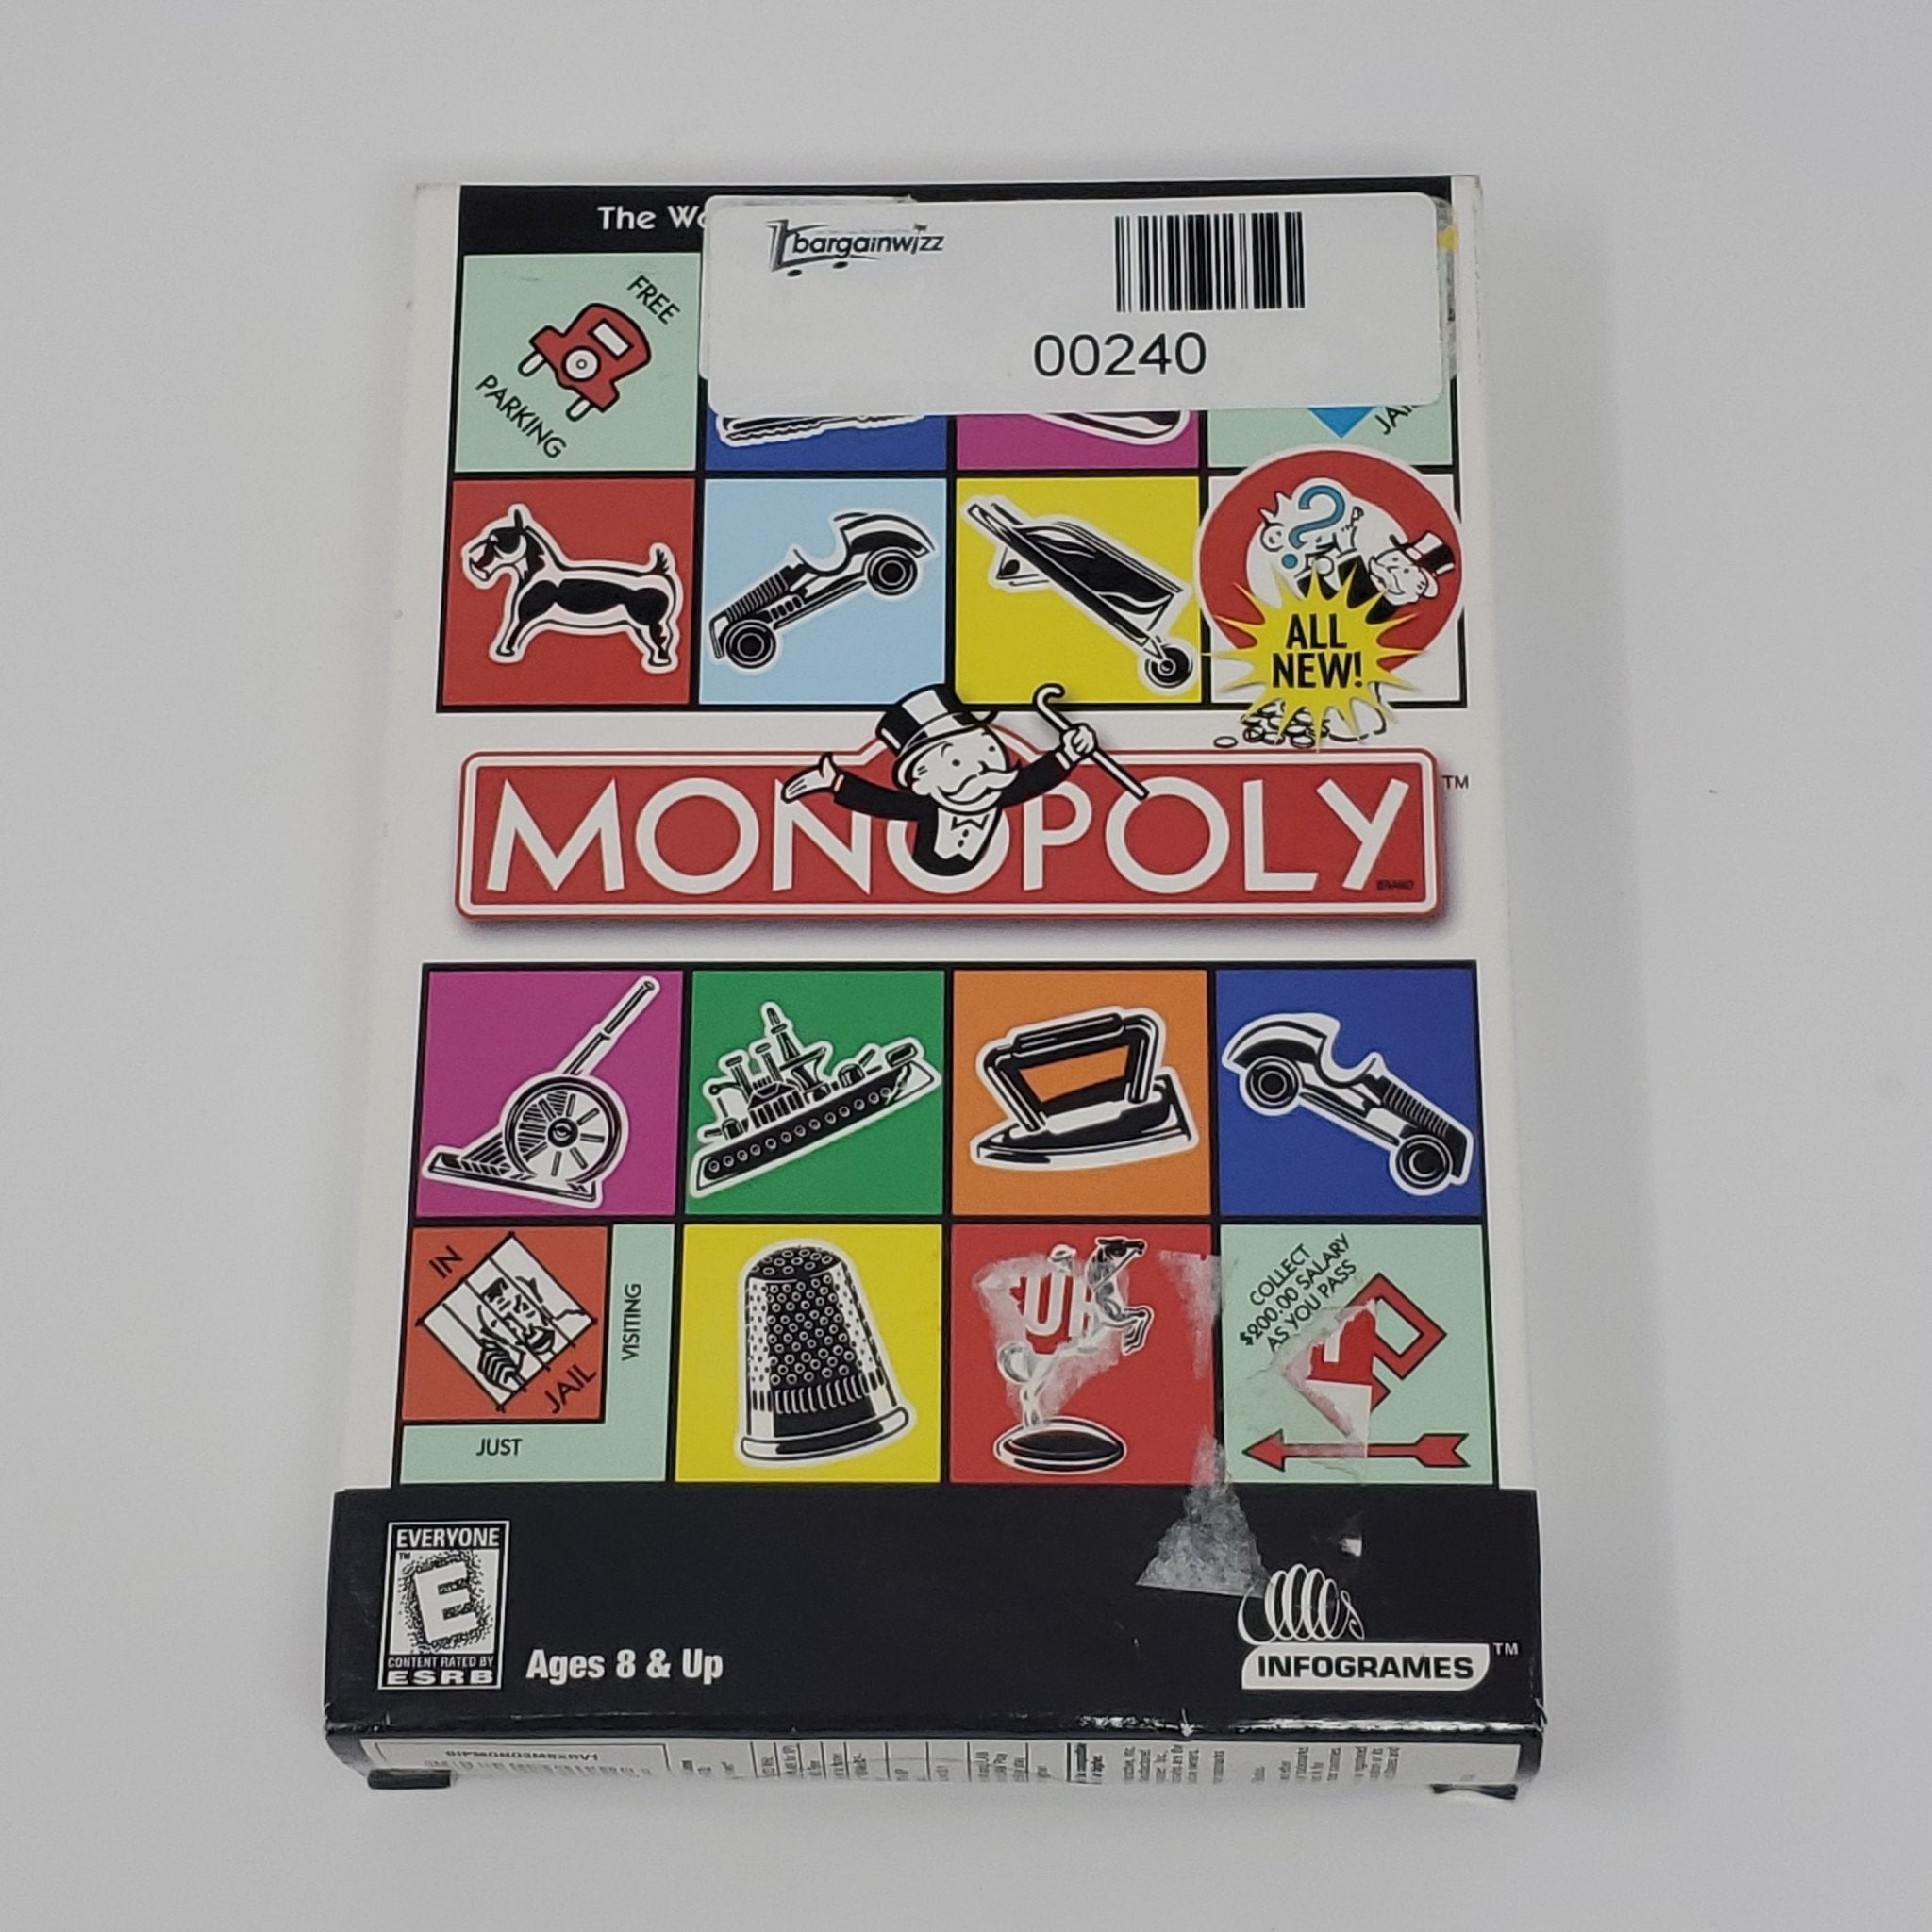 Monopoly PC Game - Bargainwizz